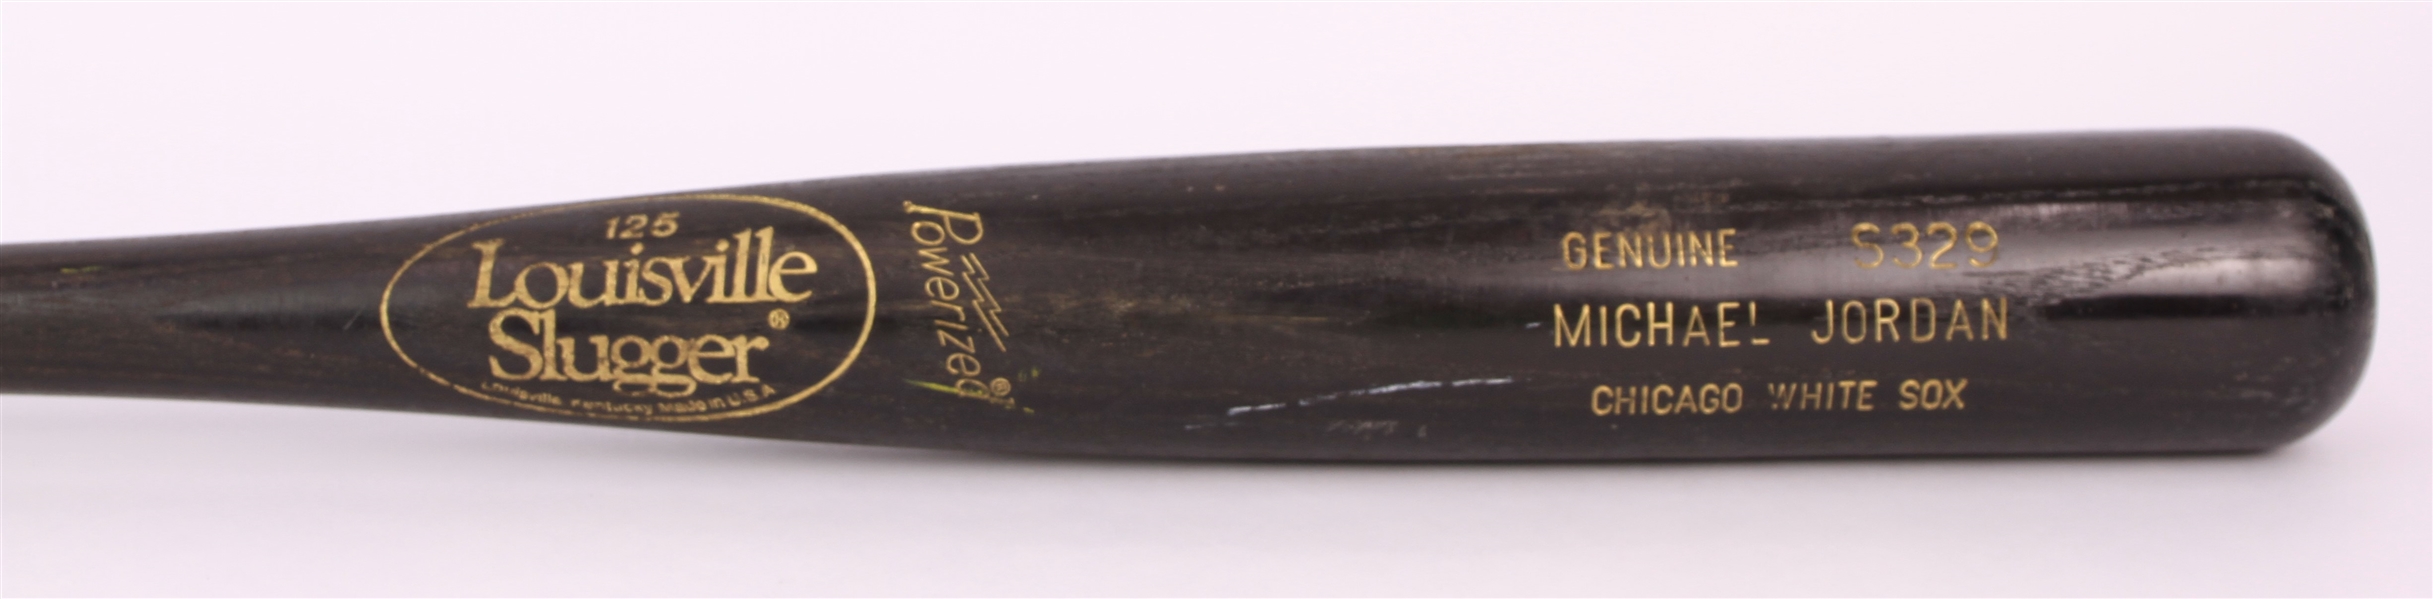 1994 Michael Jordan Chicago White Sox Louisville Slugger Professional Model Game Used Bat (MEARS A9)